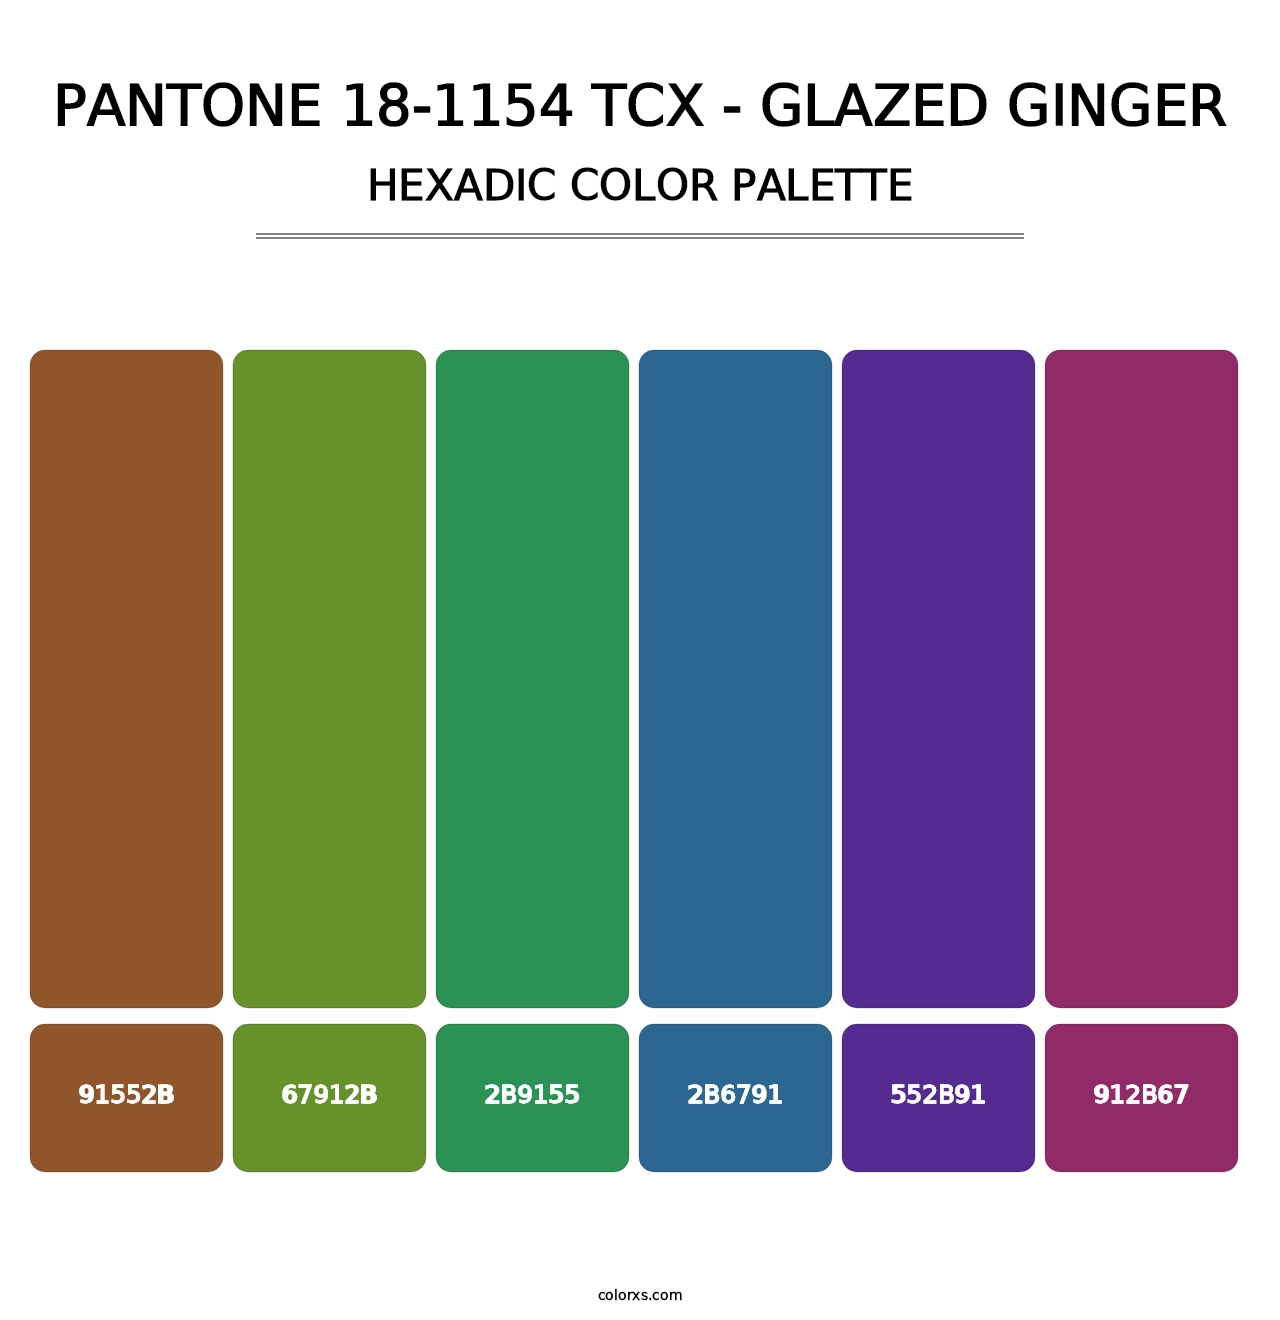 PANTONE 18-1154 TCX - Glazed Ginger - Hexadic Color Palette